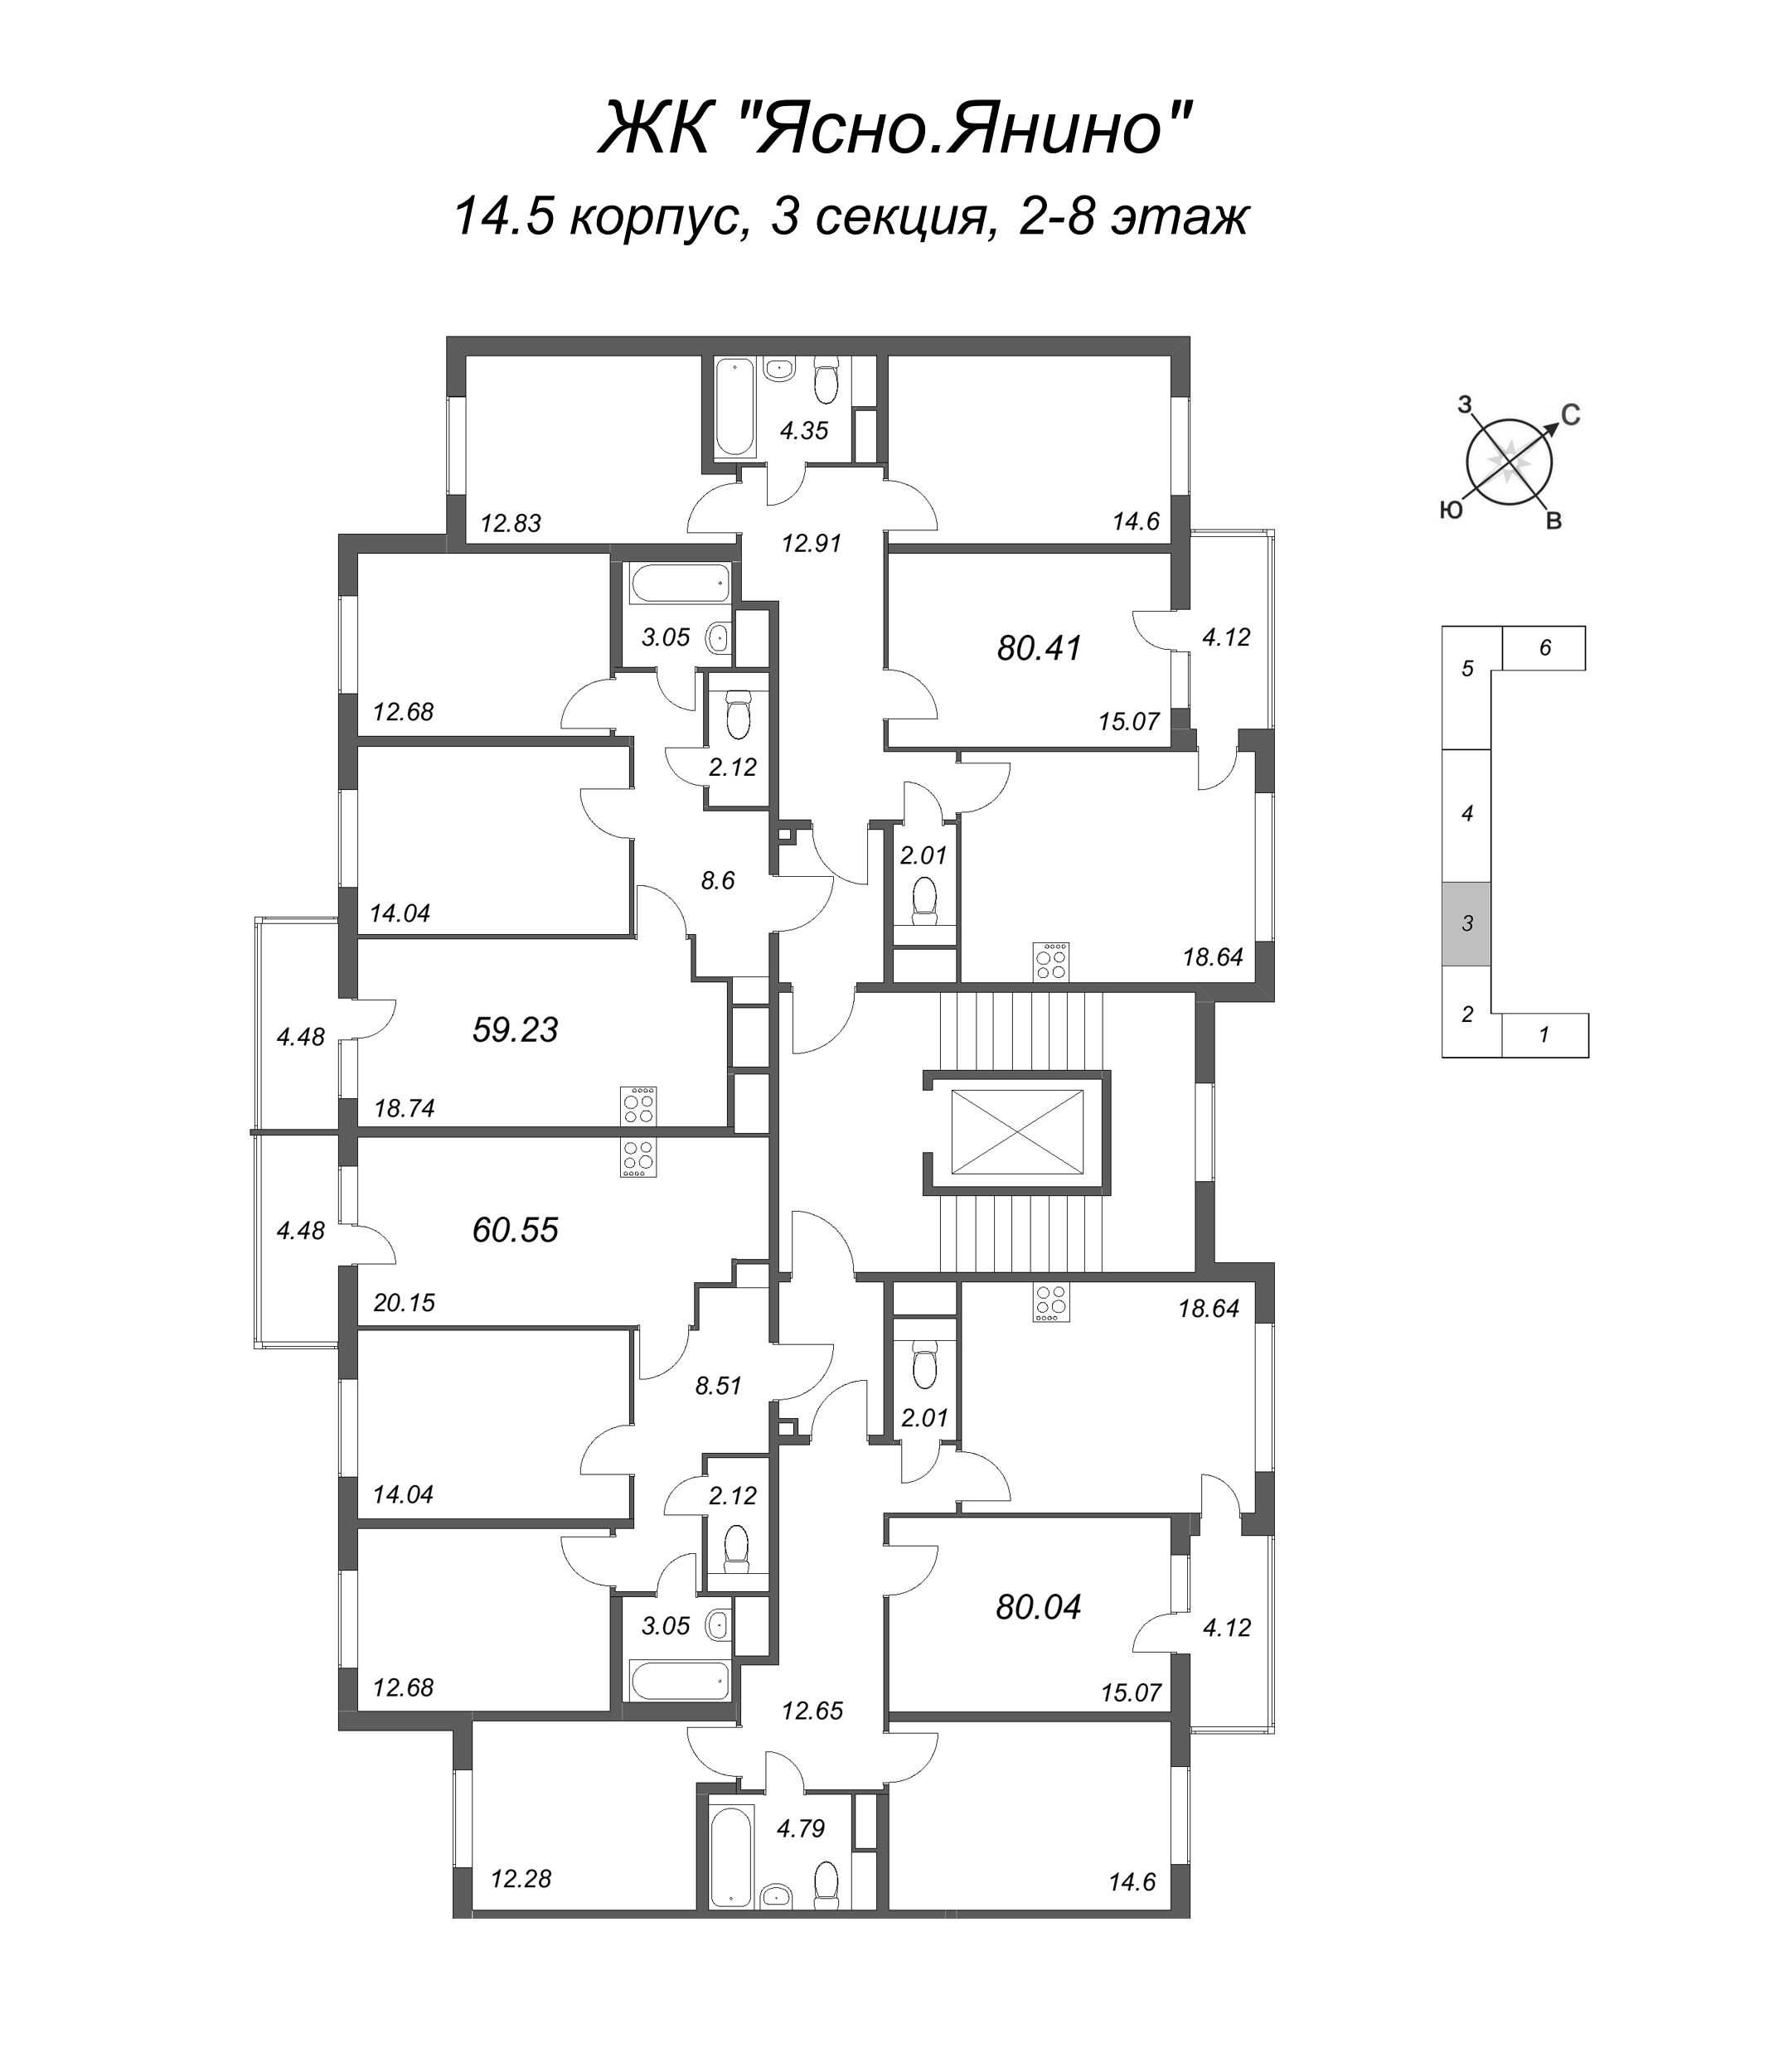 4-комнатная (Евро) квартира, 80.04 м² - планировка этажа